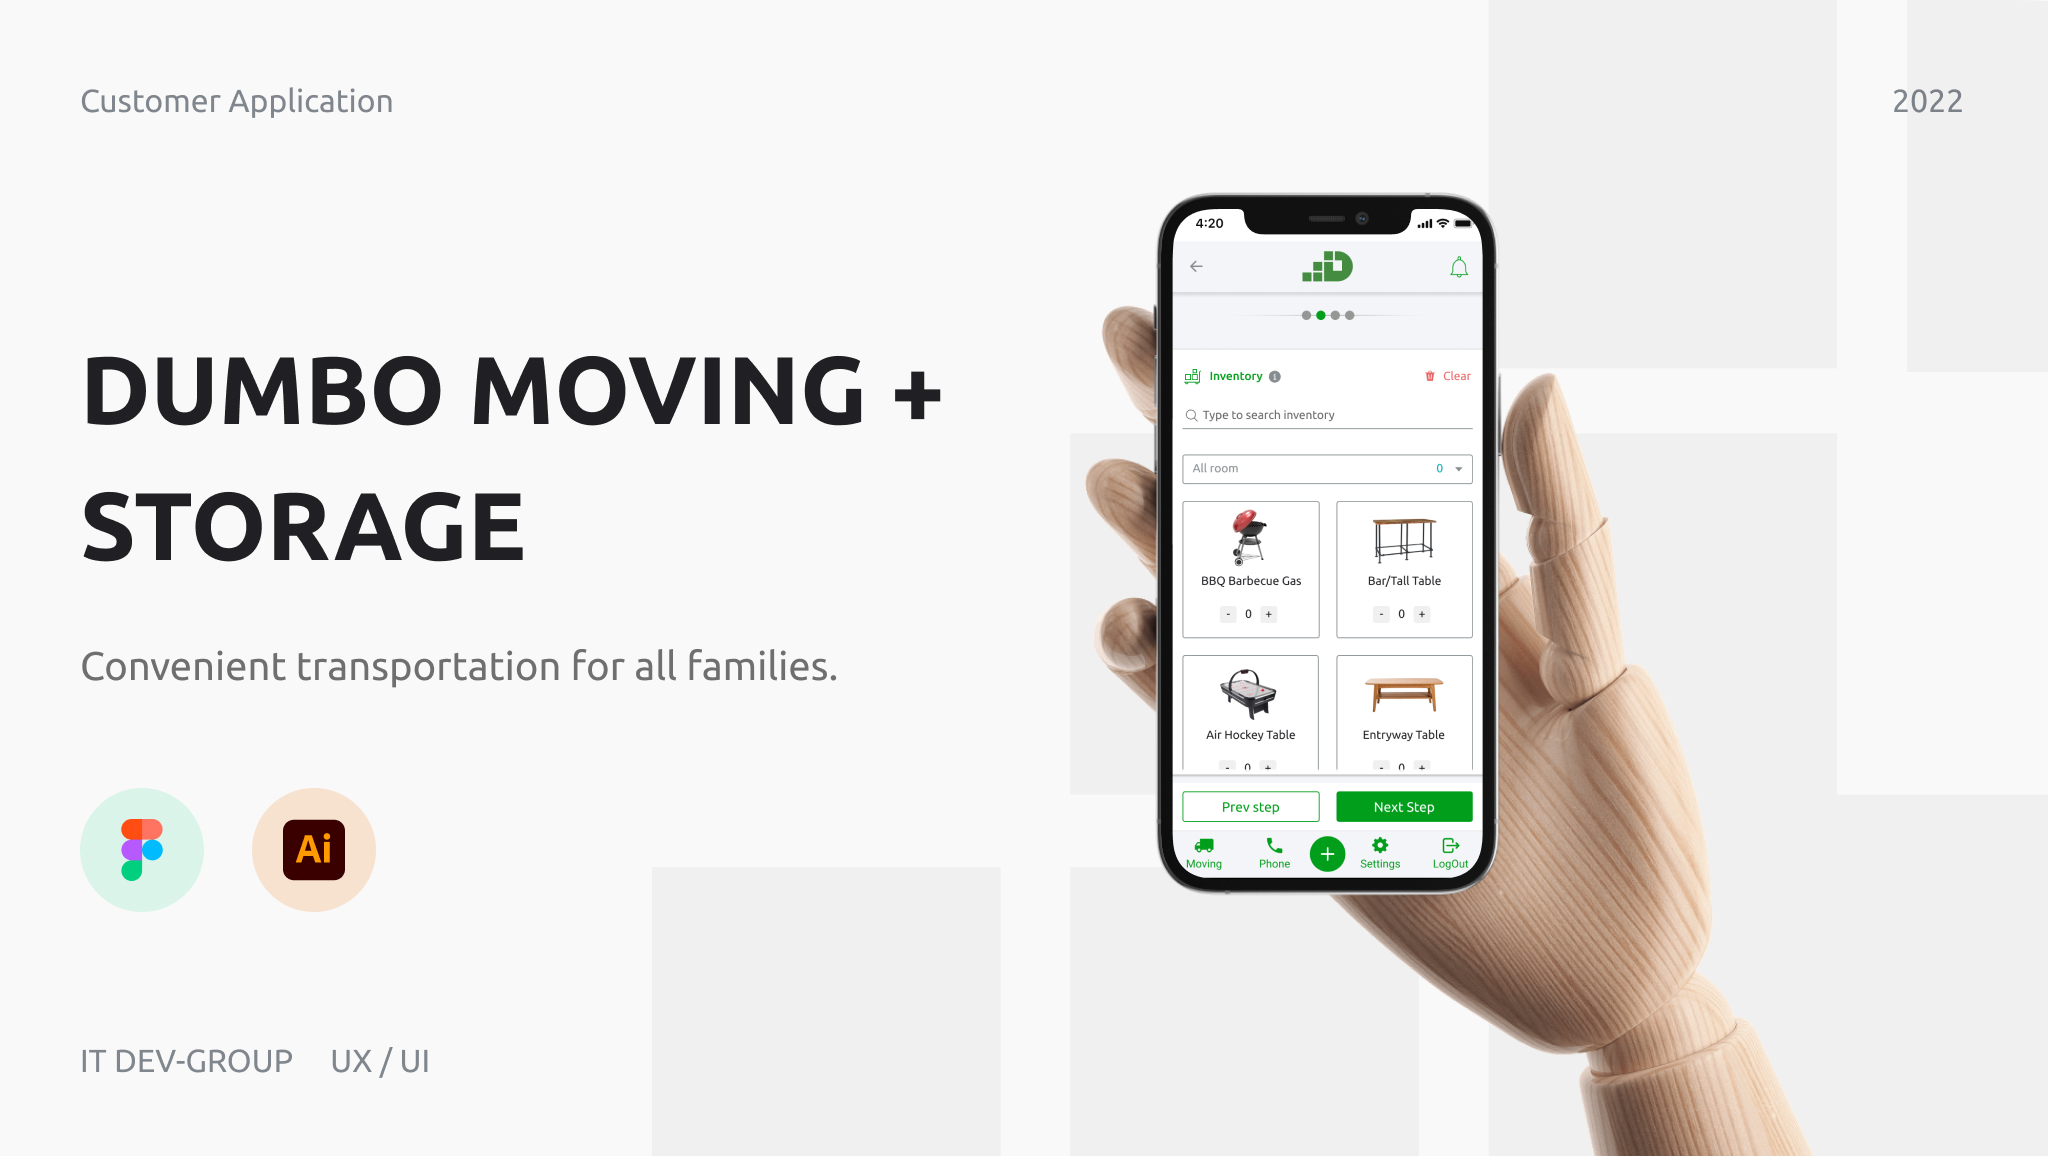 Dumbo Moving + Storage (app)